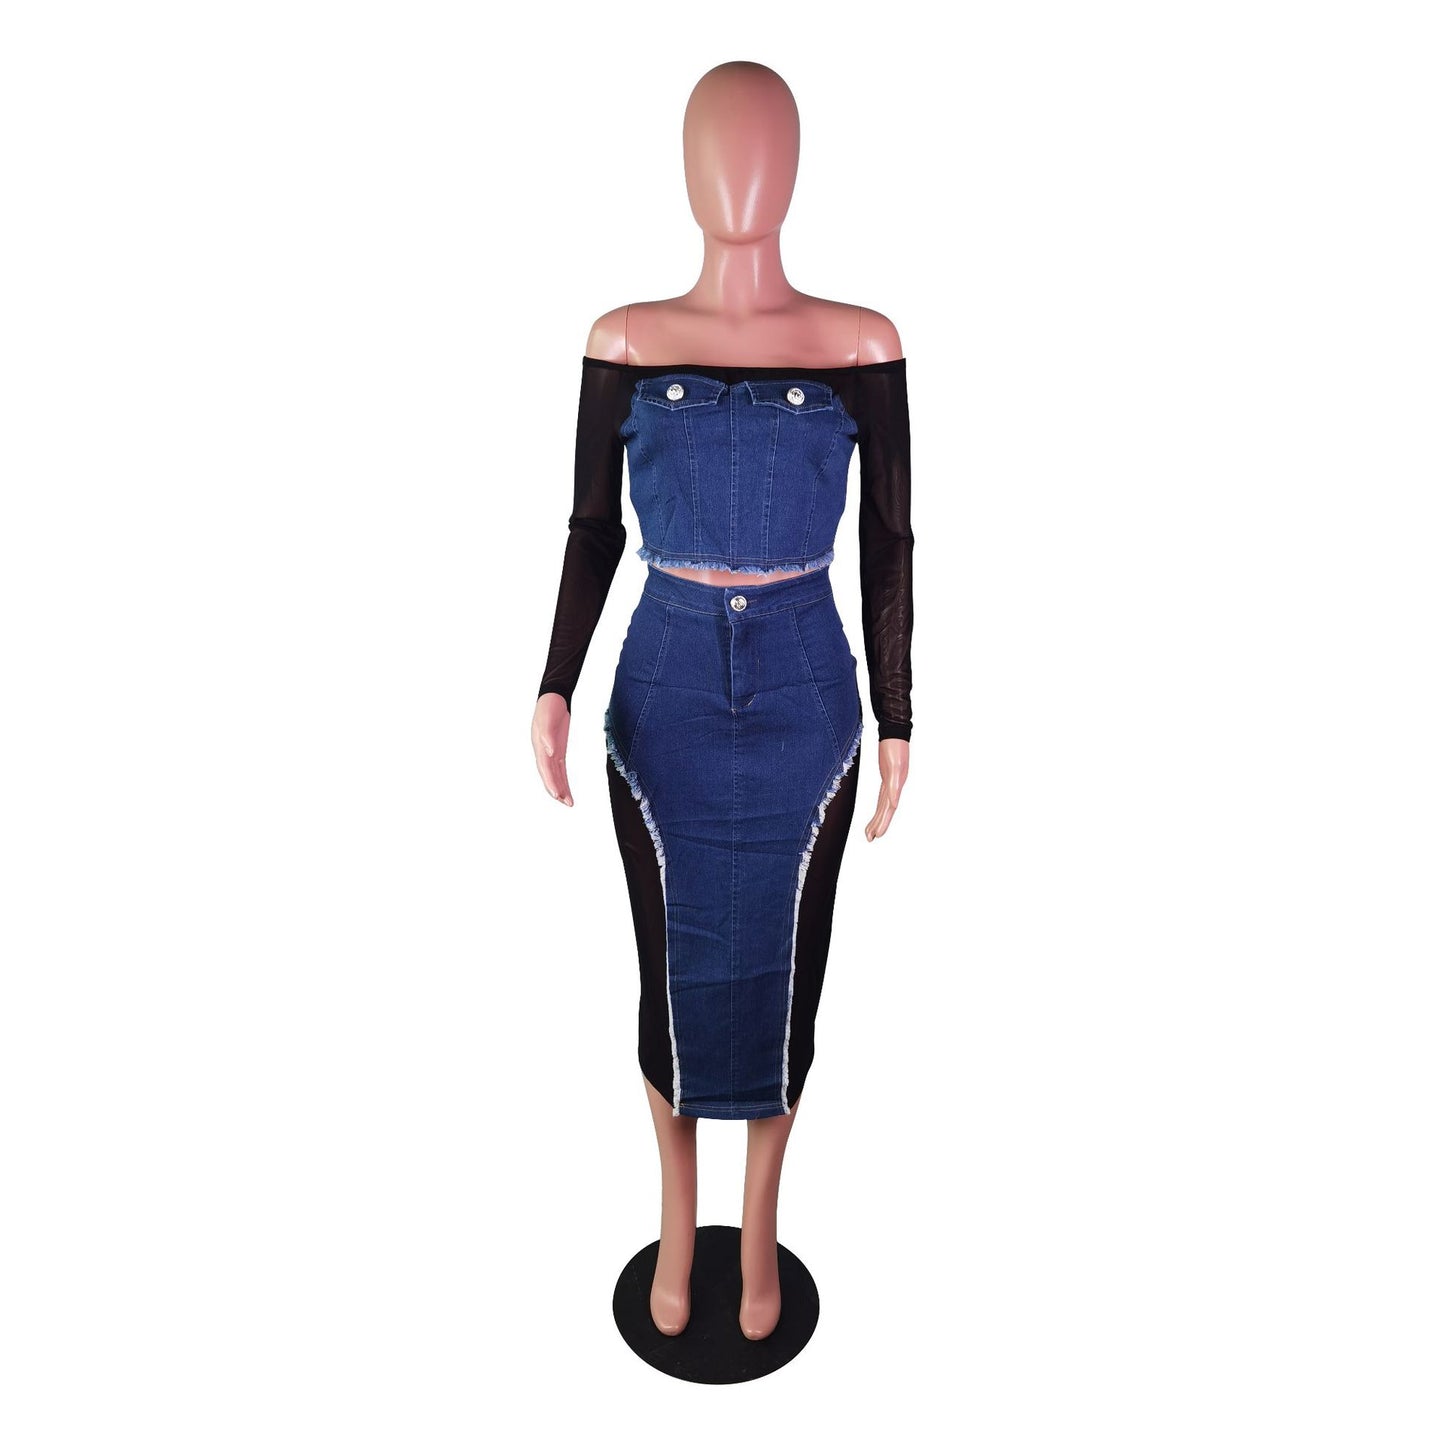 Women's Fashion Mesh Denim Stitching See-through Tube Top Skirt Two-piece Set